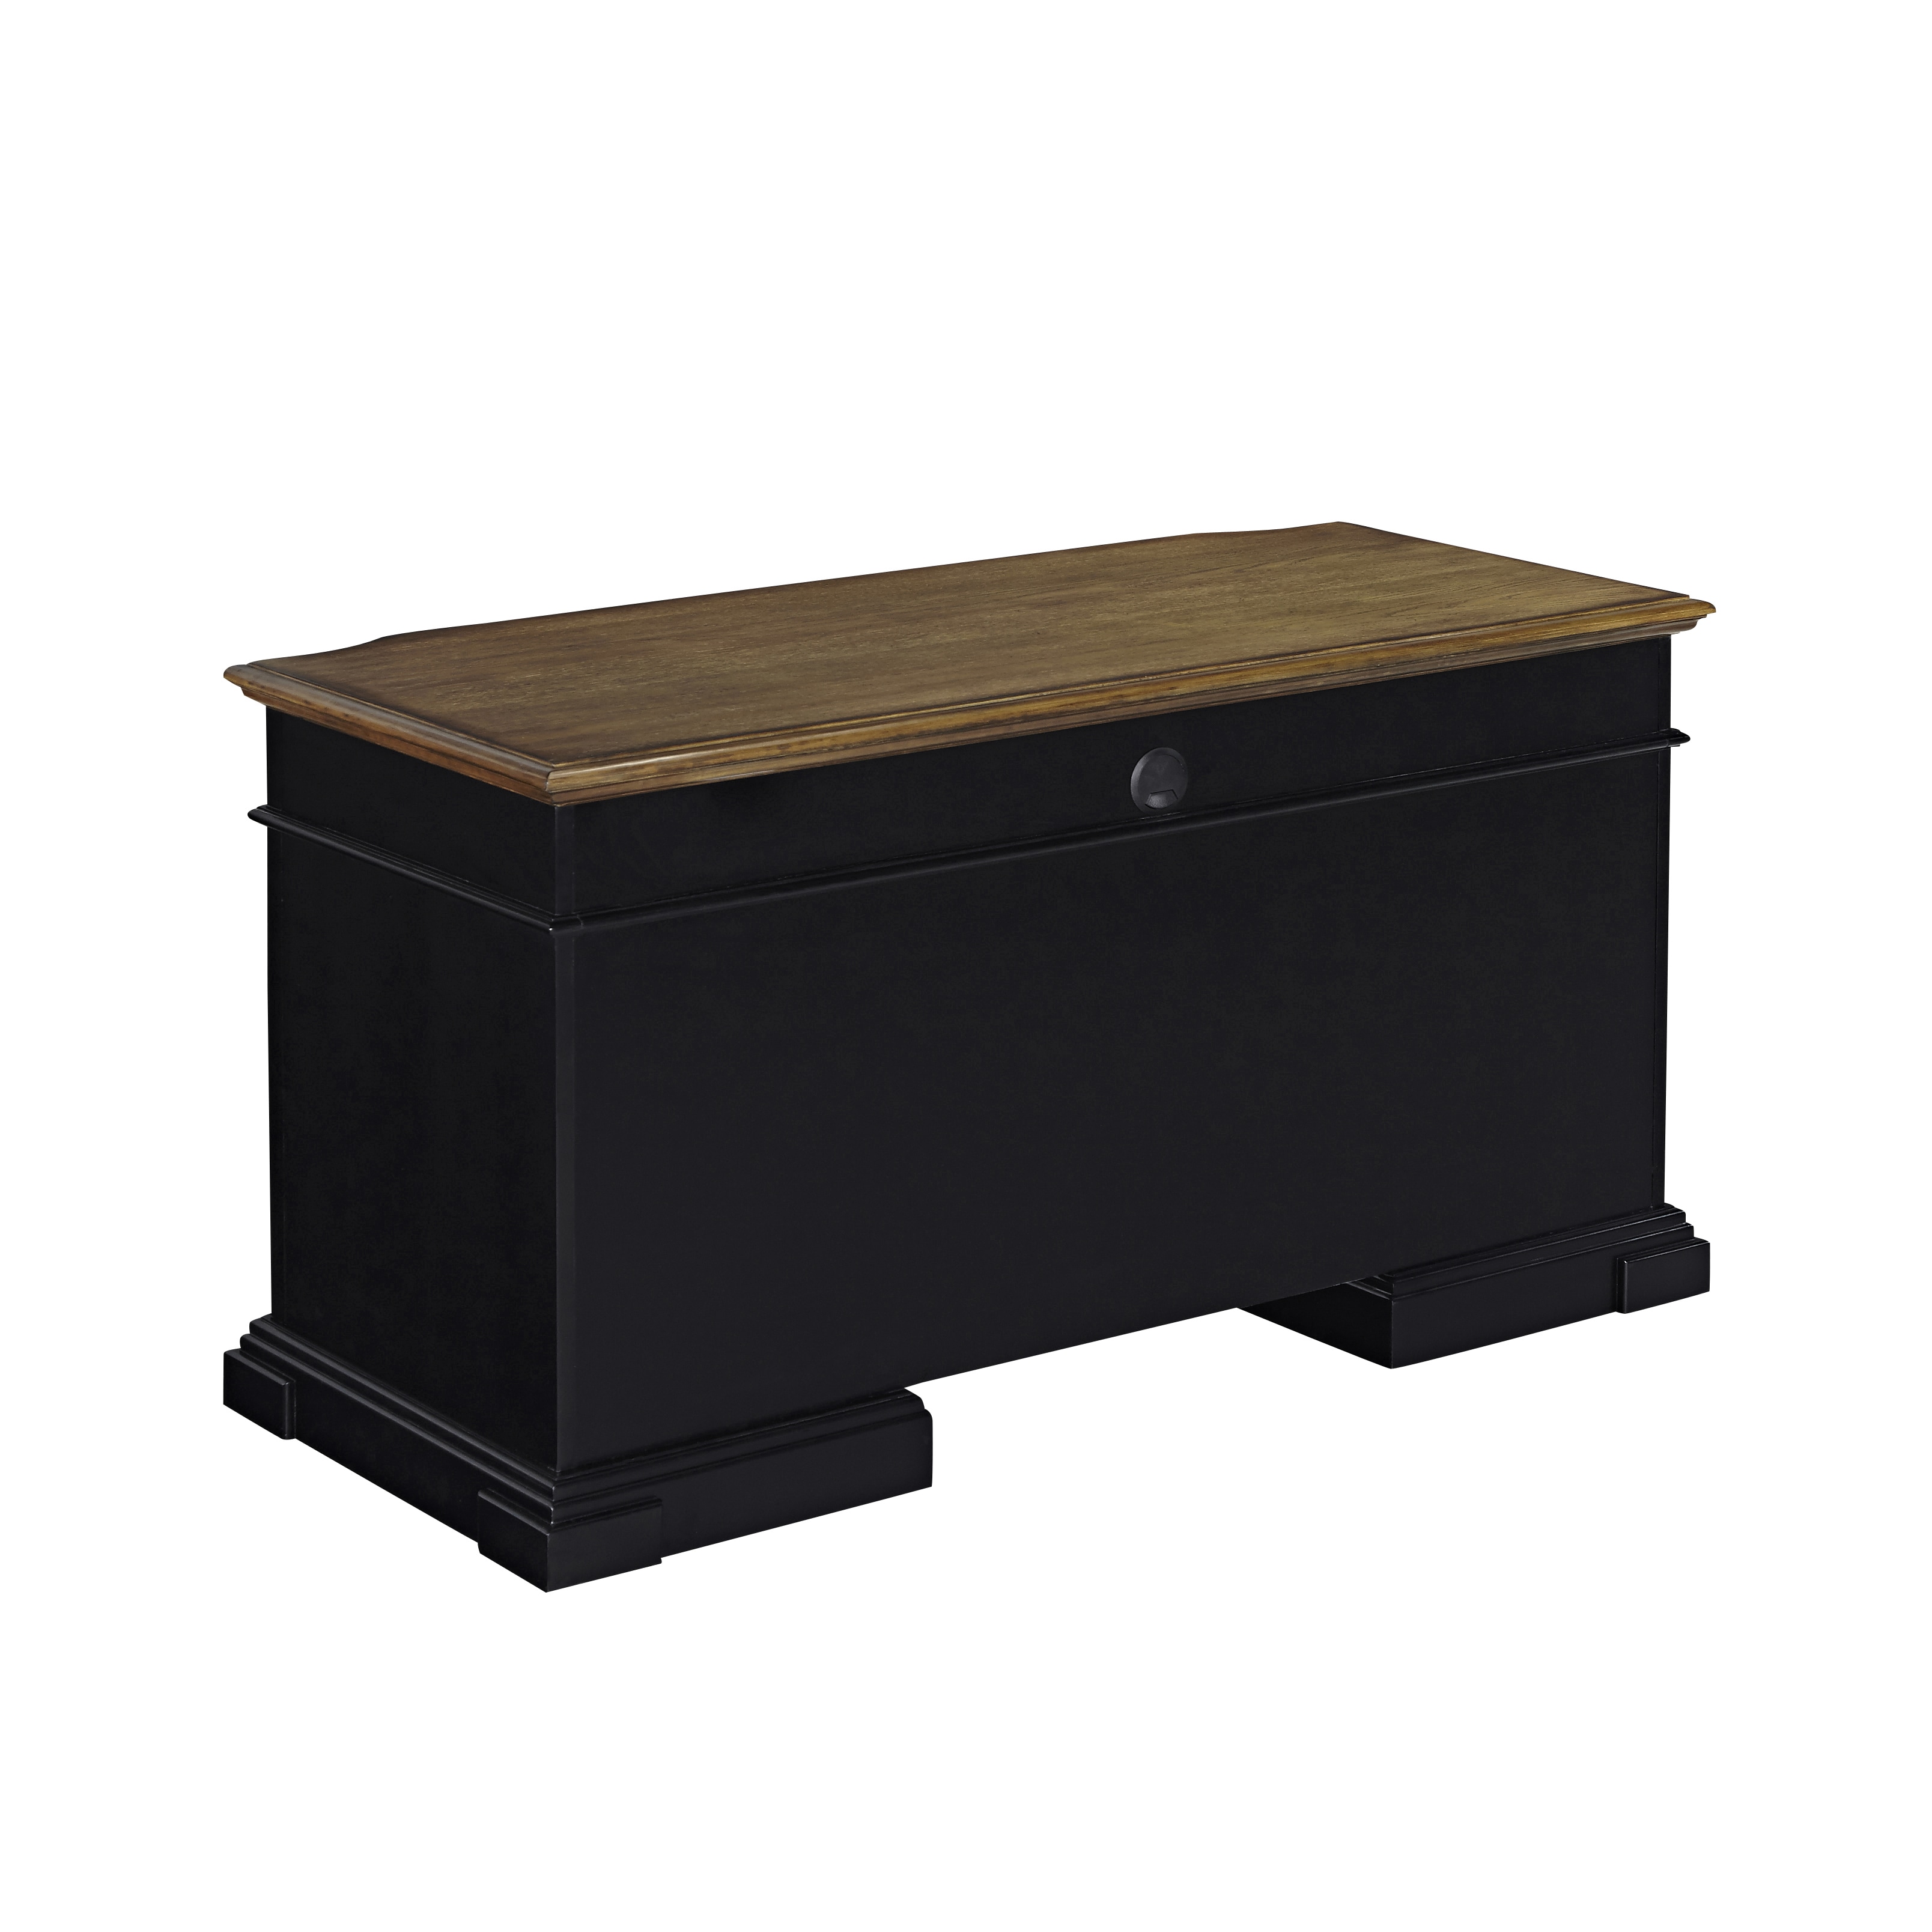 Shop Americana Black Pedestal Desk By Home Styles On Sale